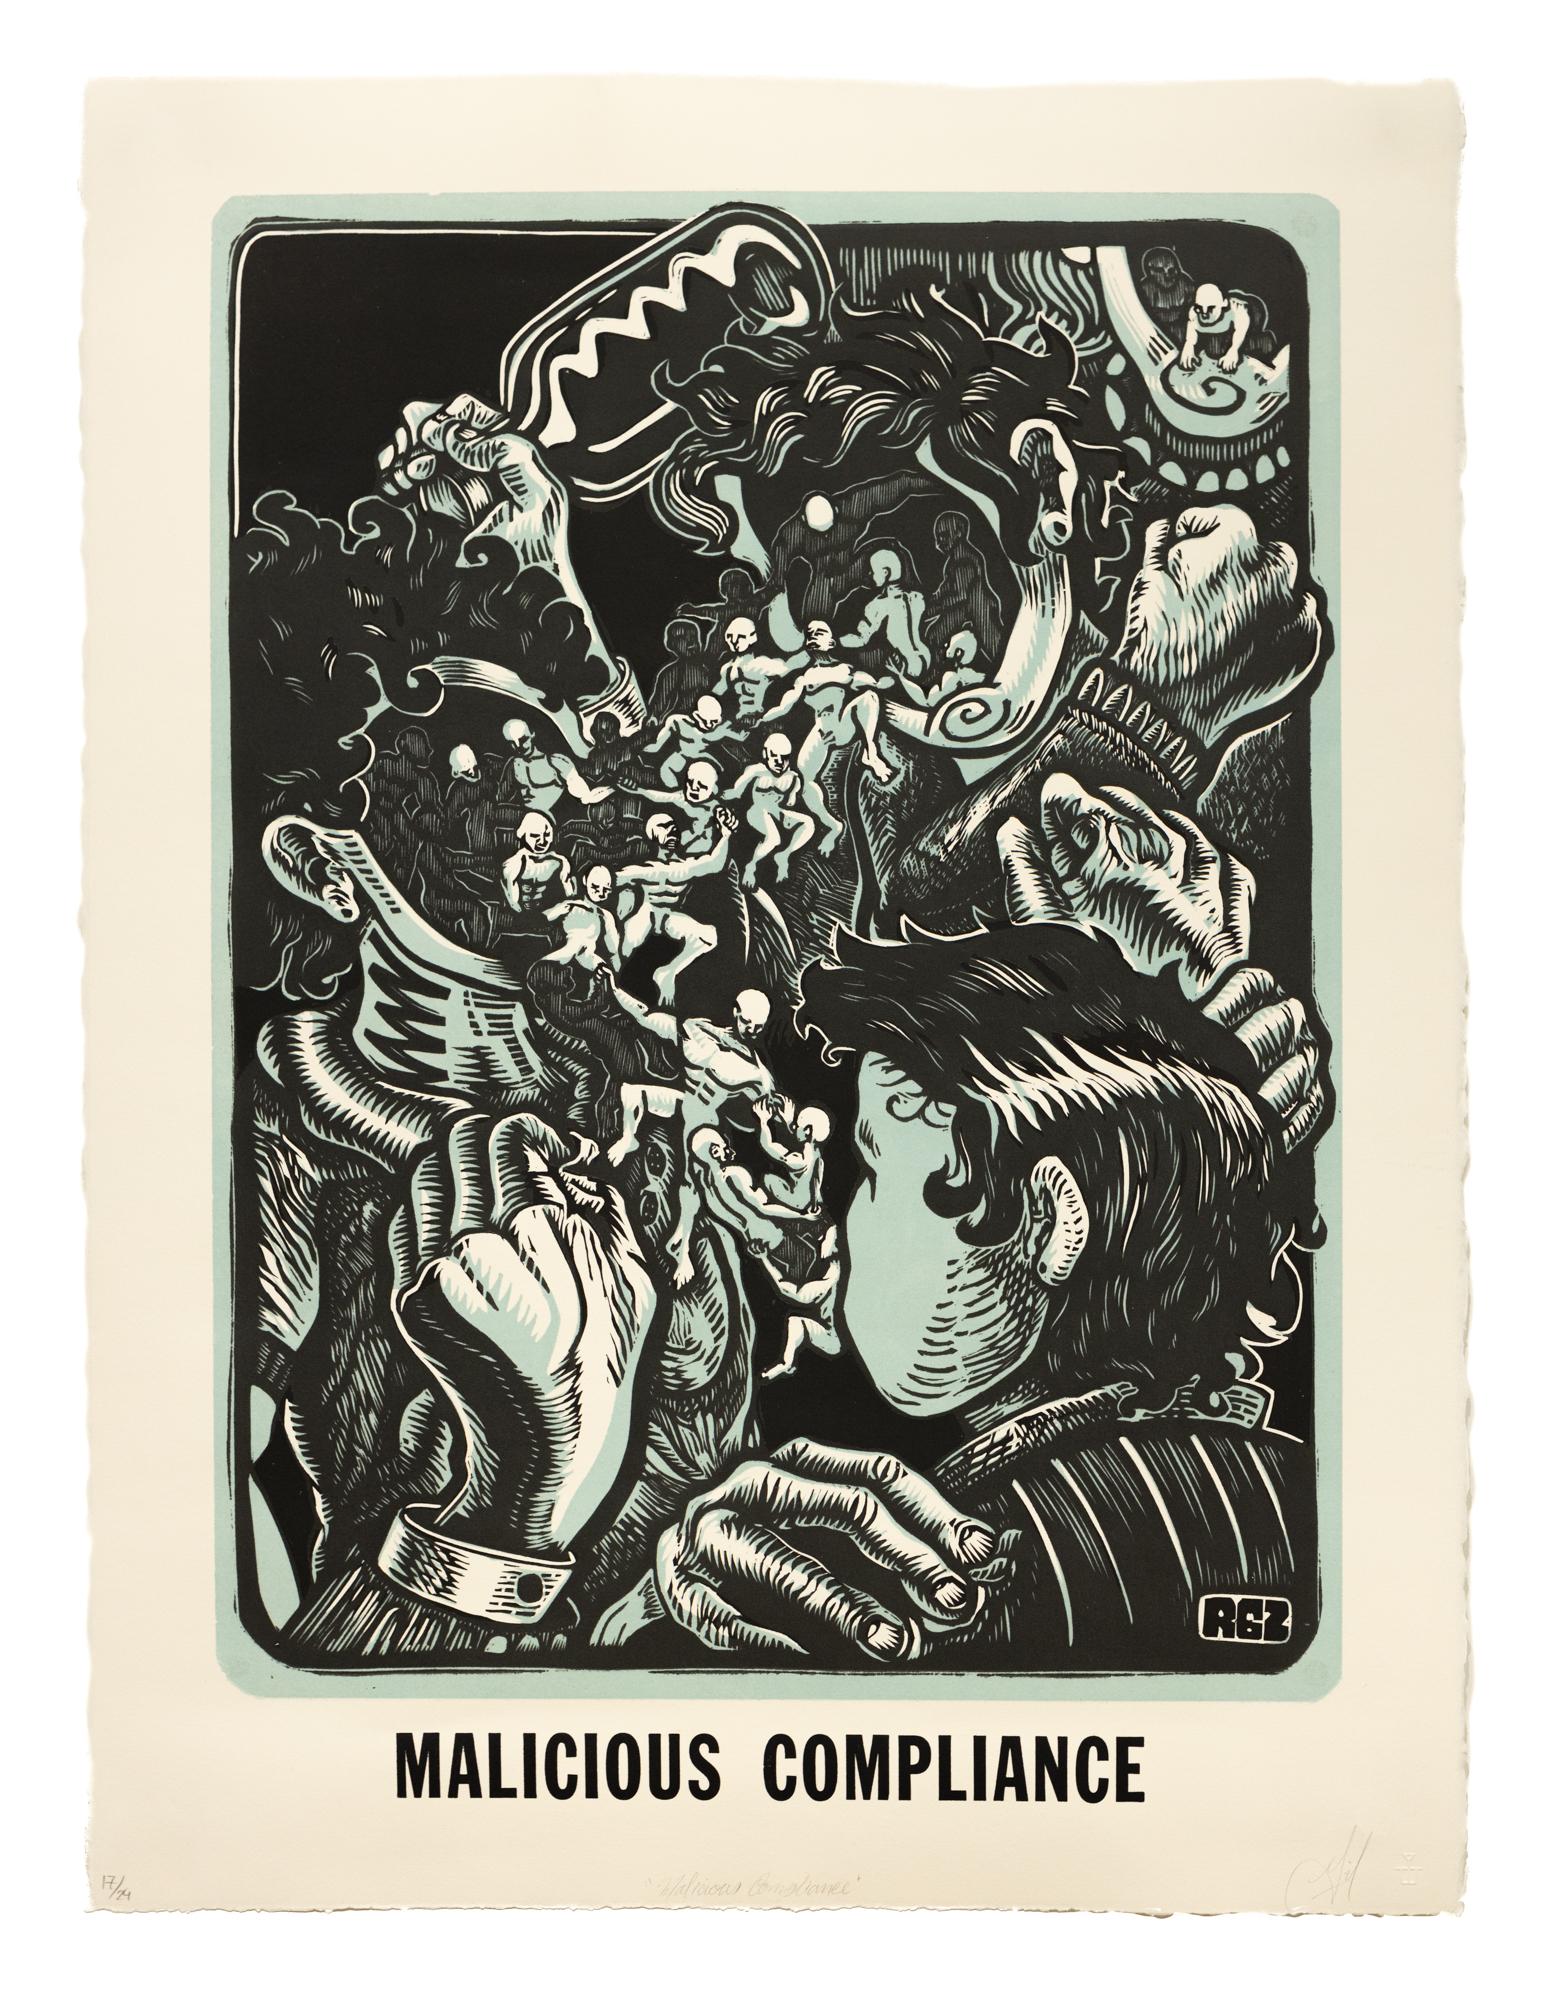 Reinaldo Gil Zambrano Figurative Print - "Malicious Compliance", Figurative, Depiction of Violence, Relief Print